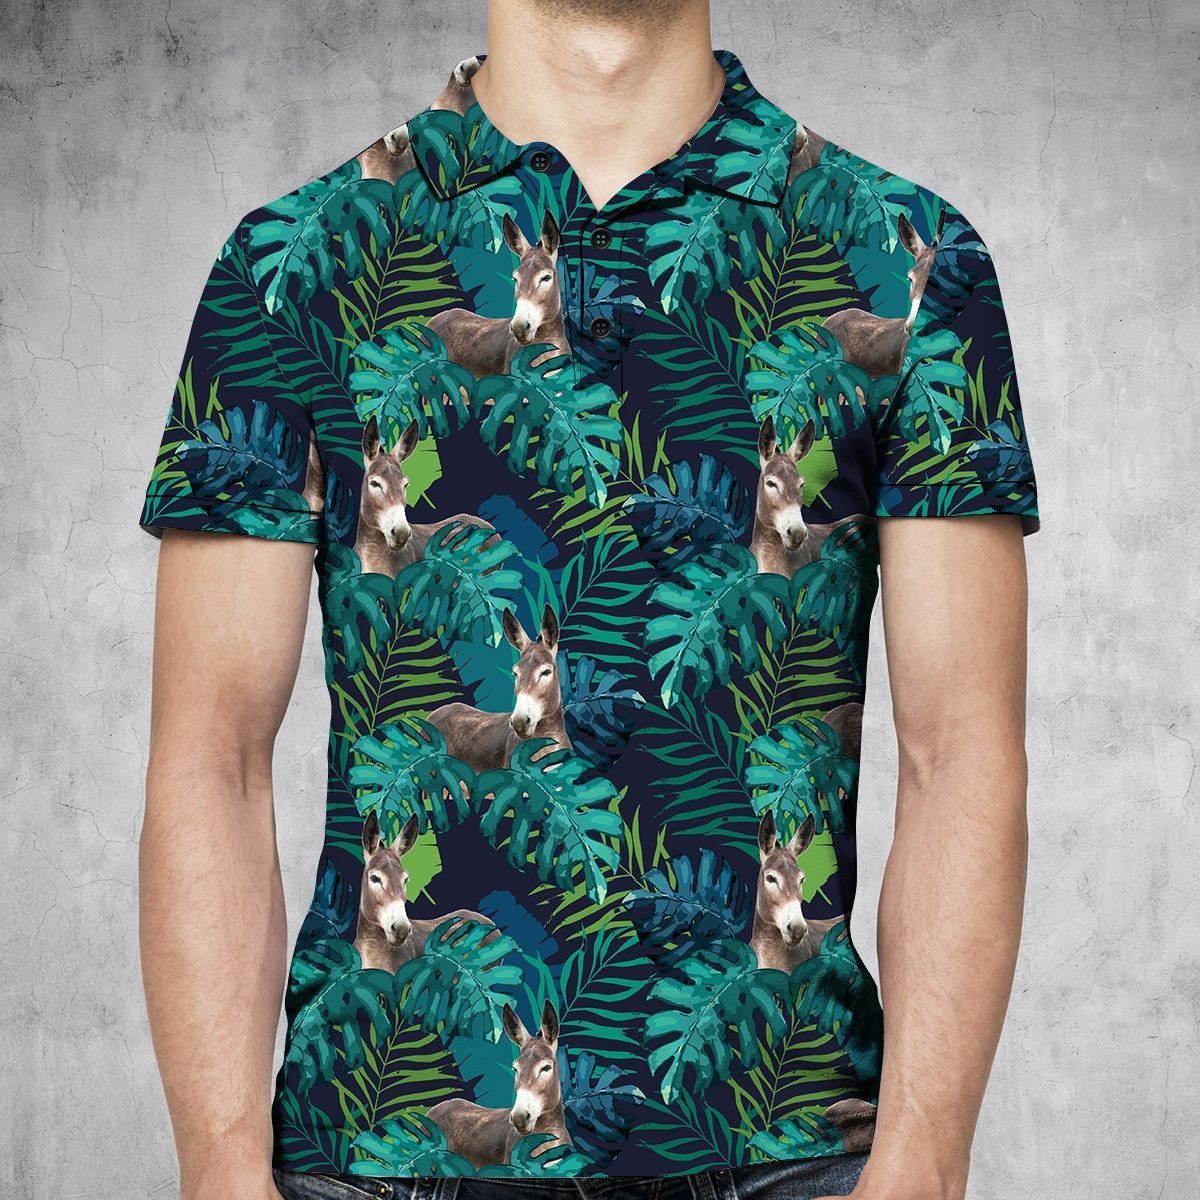 Donkey Shirt – Amazing Tropical Donkey On The Farm Polo Shirt For Men And Women